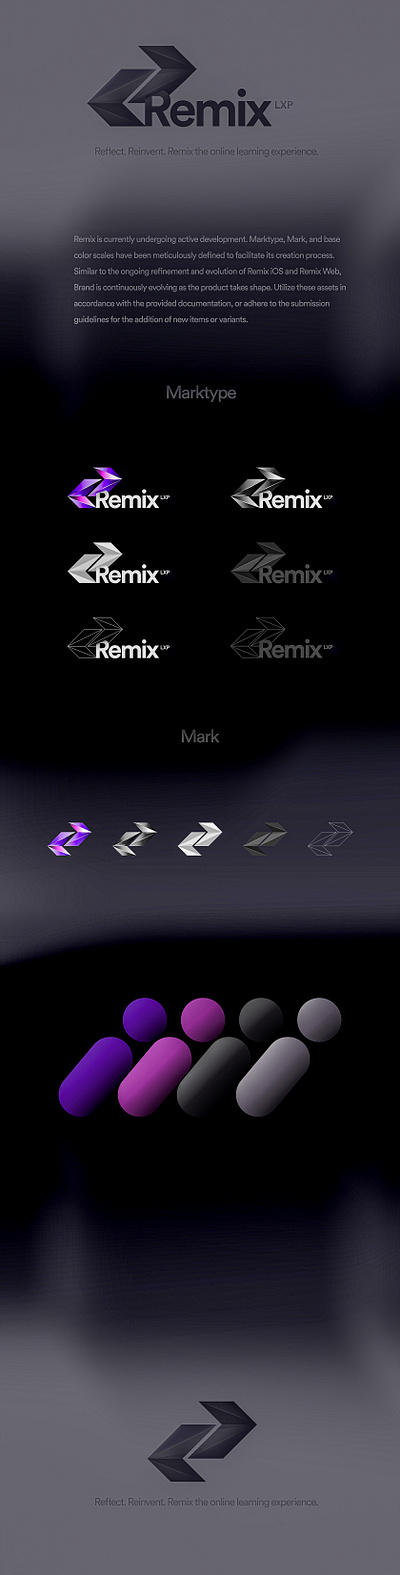 Remix LXP Brand | WIP app branding bryan funk concept design illustration logo prodkt